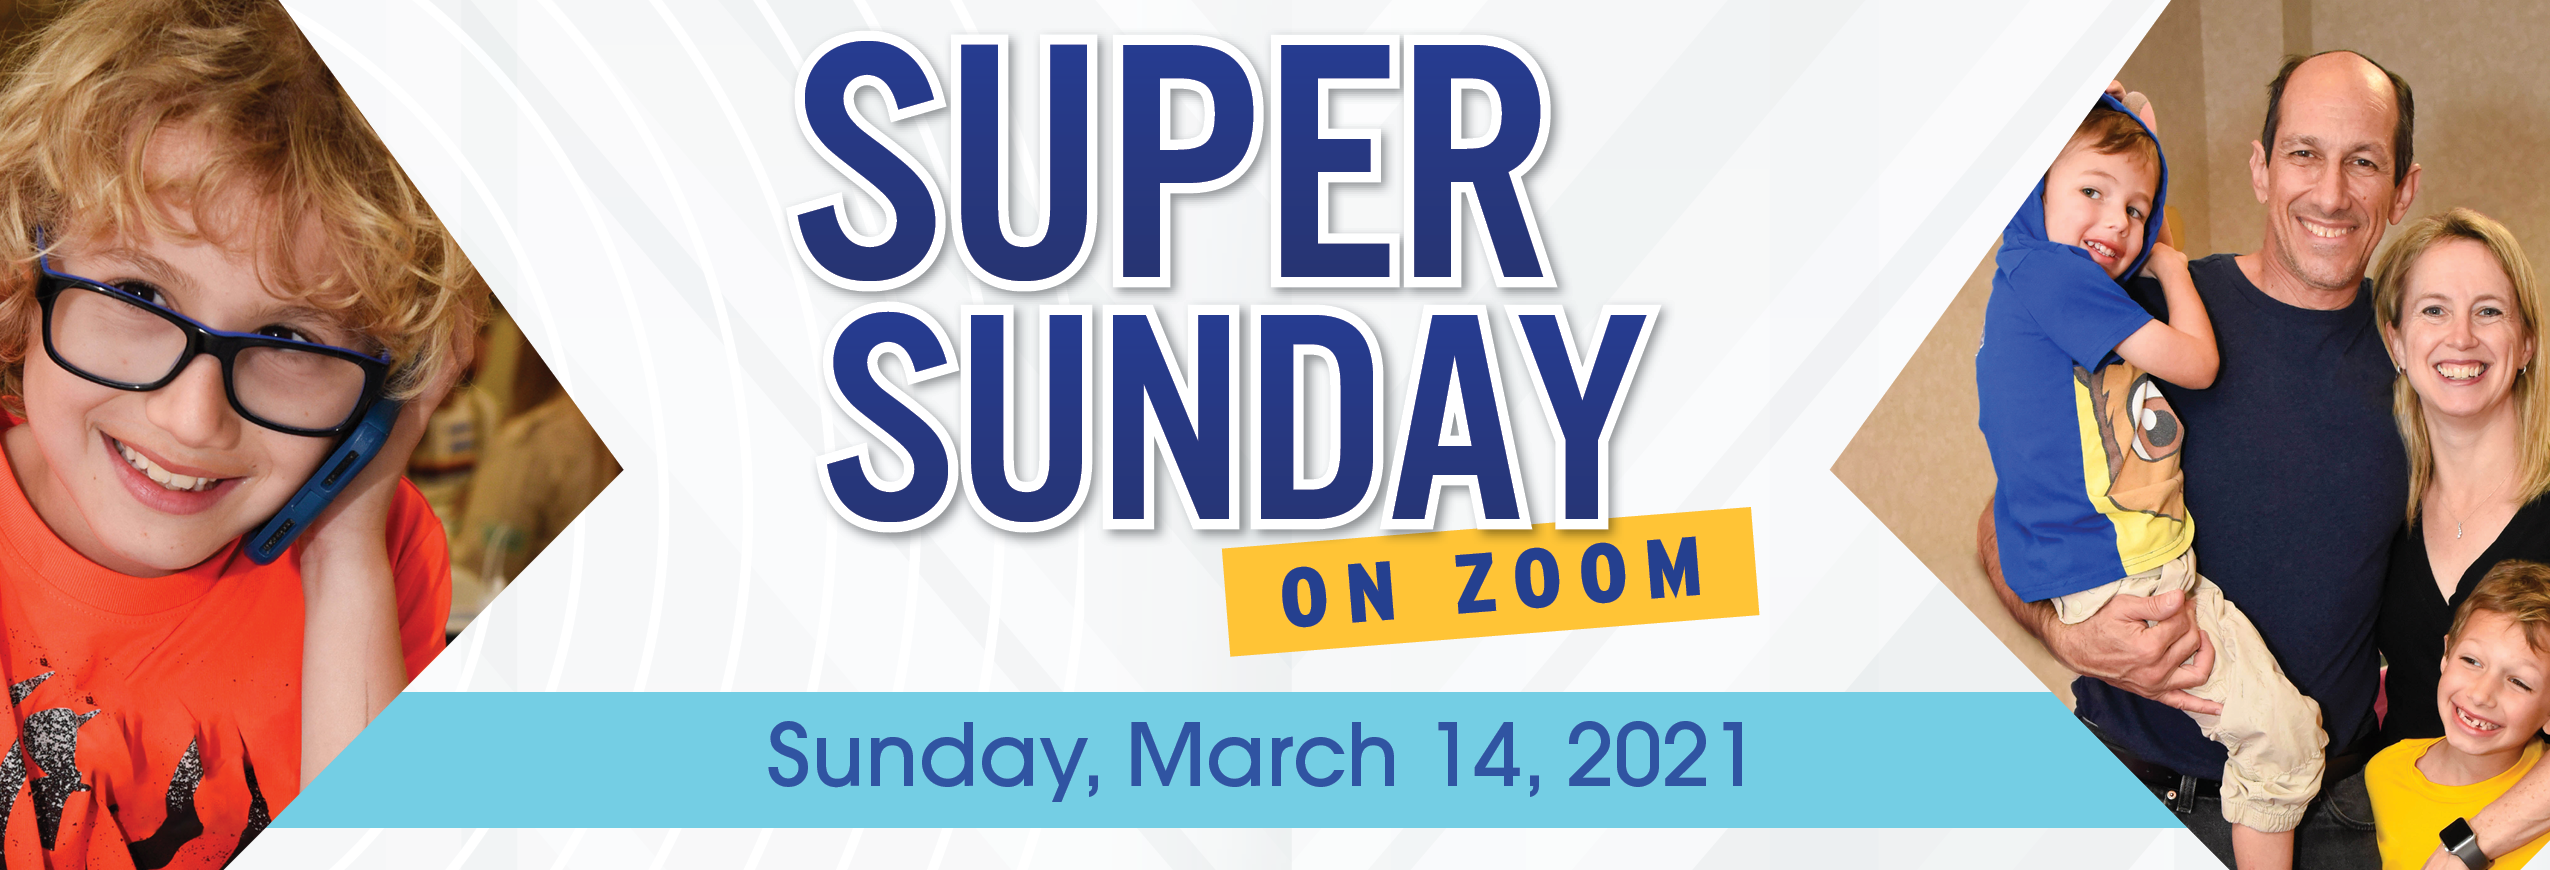 Super Sunday 2021